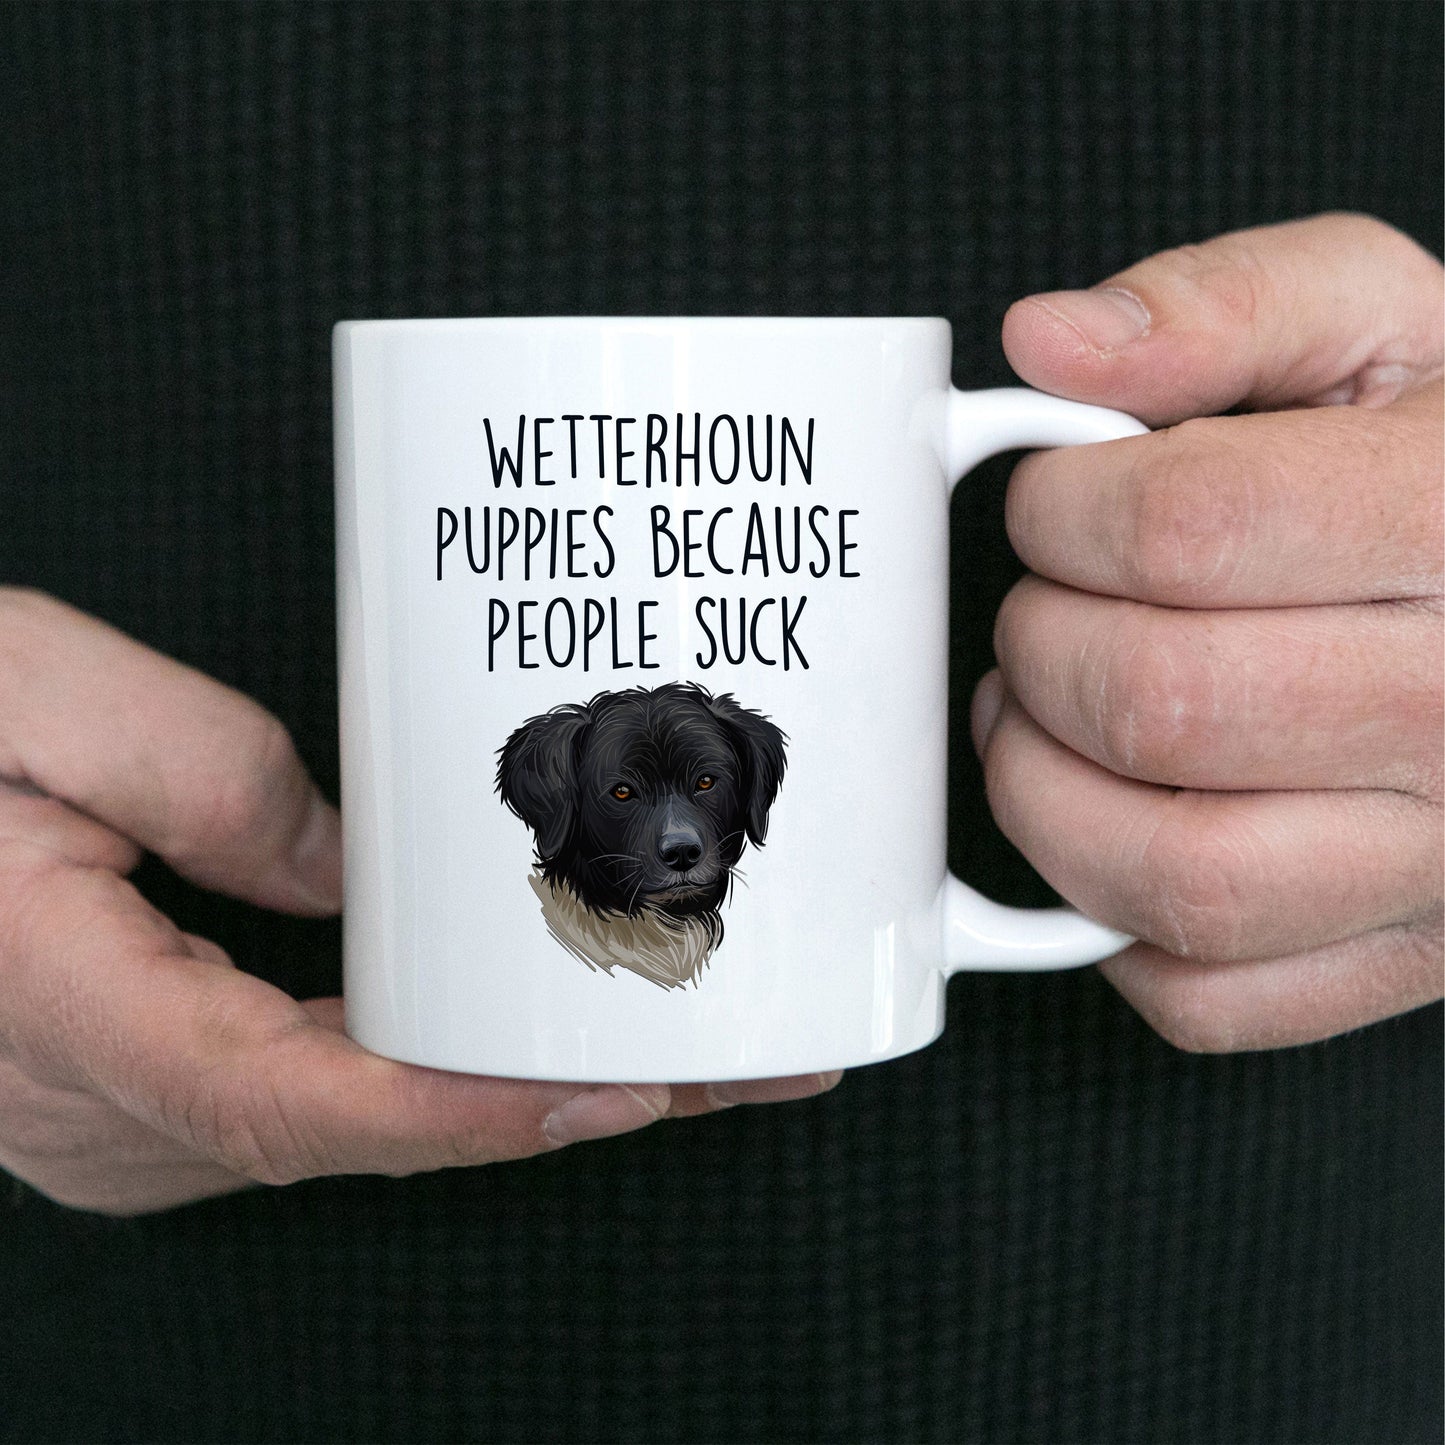 Wetterhoun Puppies Because People Suck Funny Dog Ceramic Coffee Mug